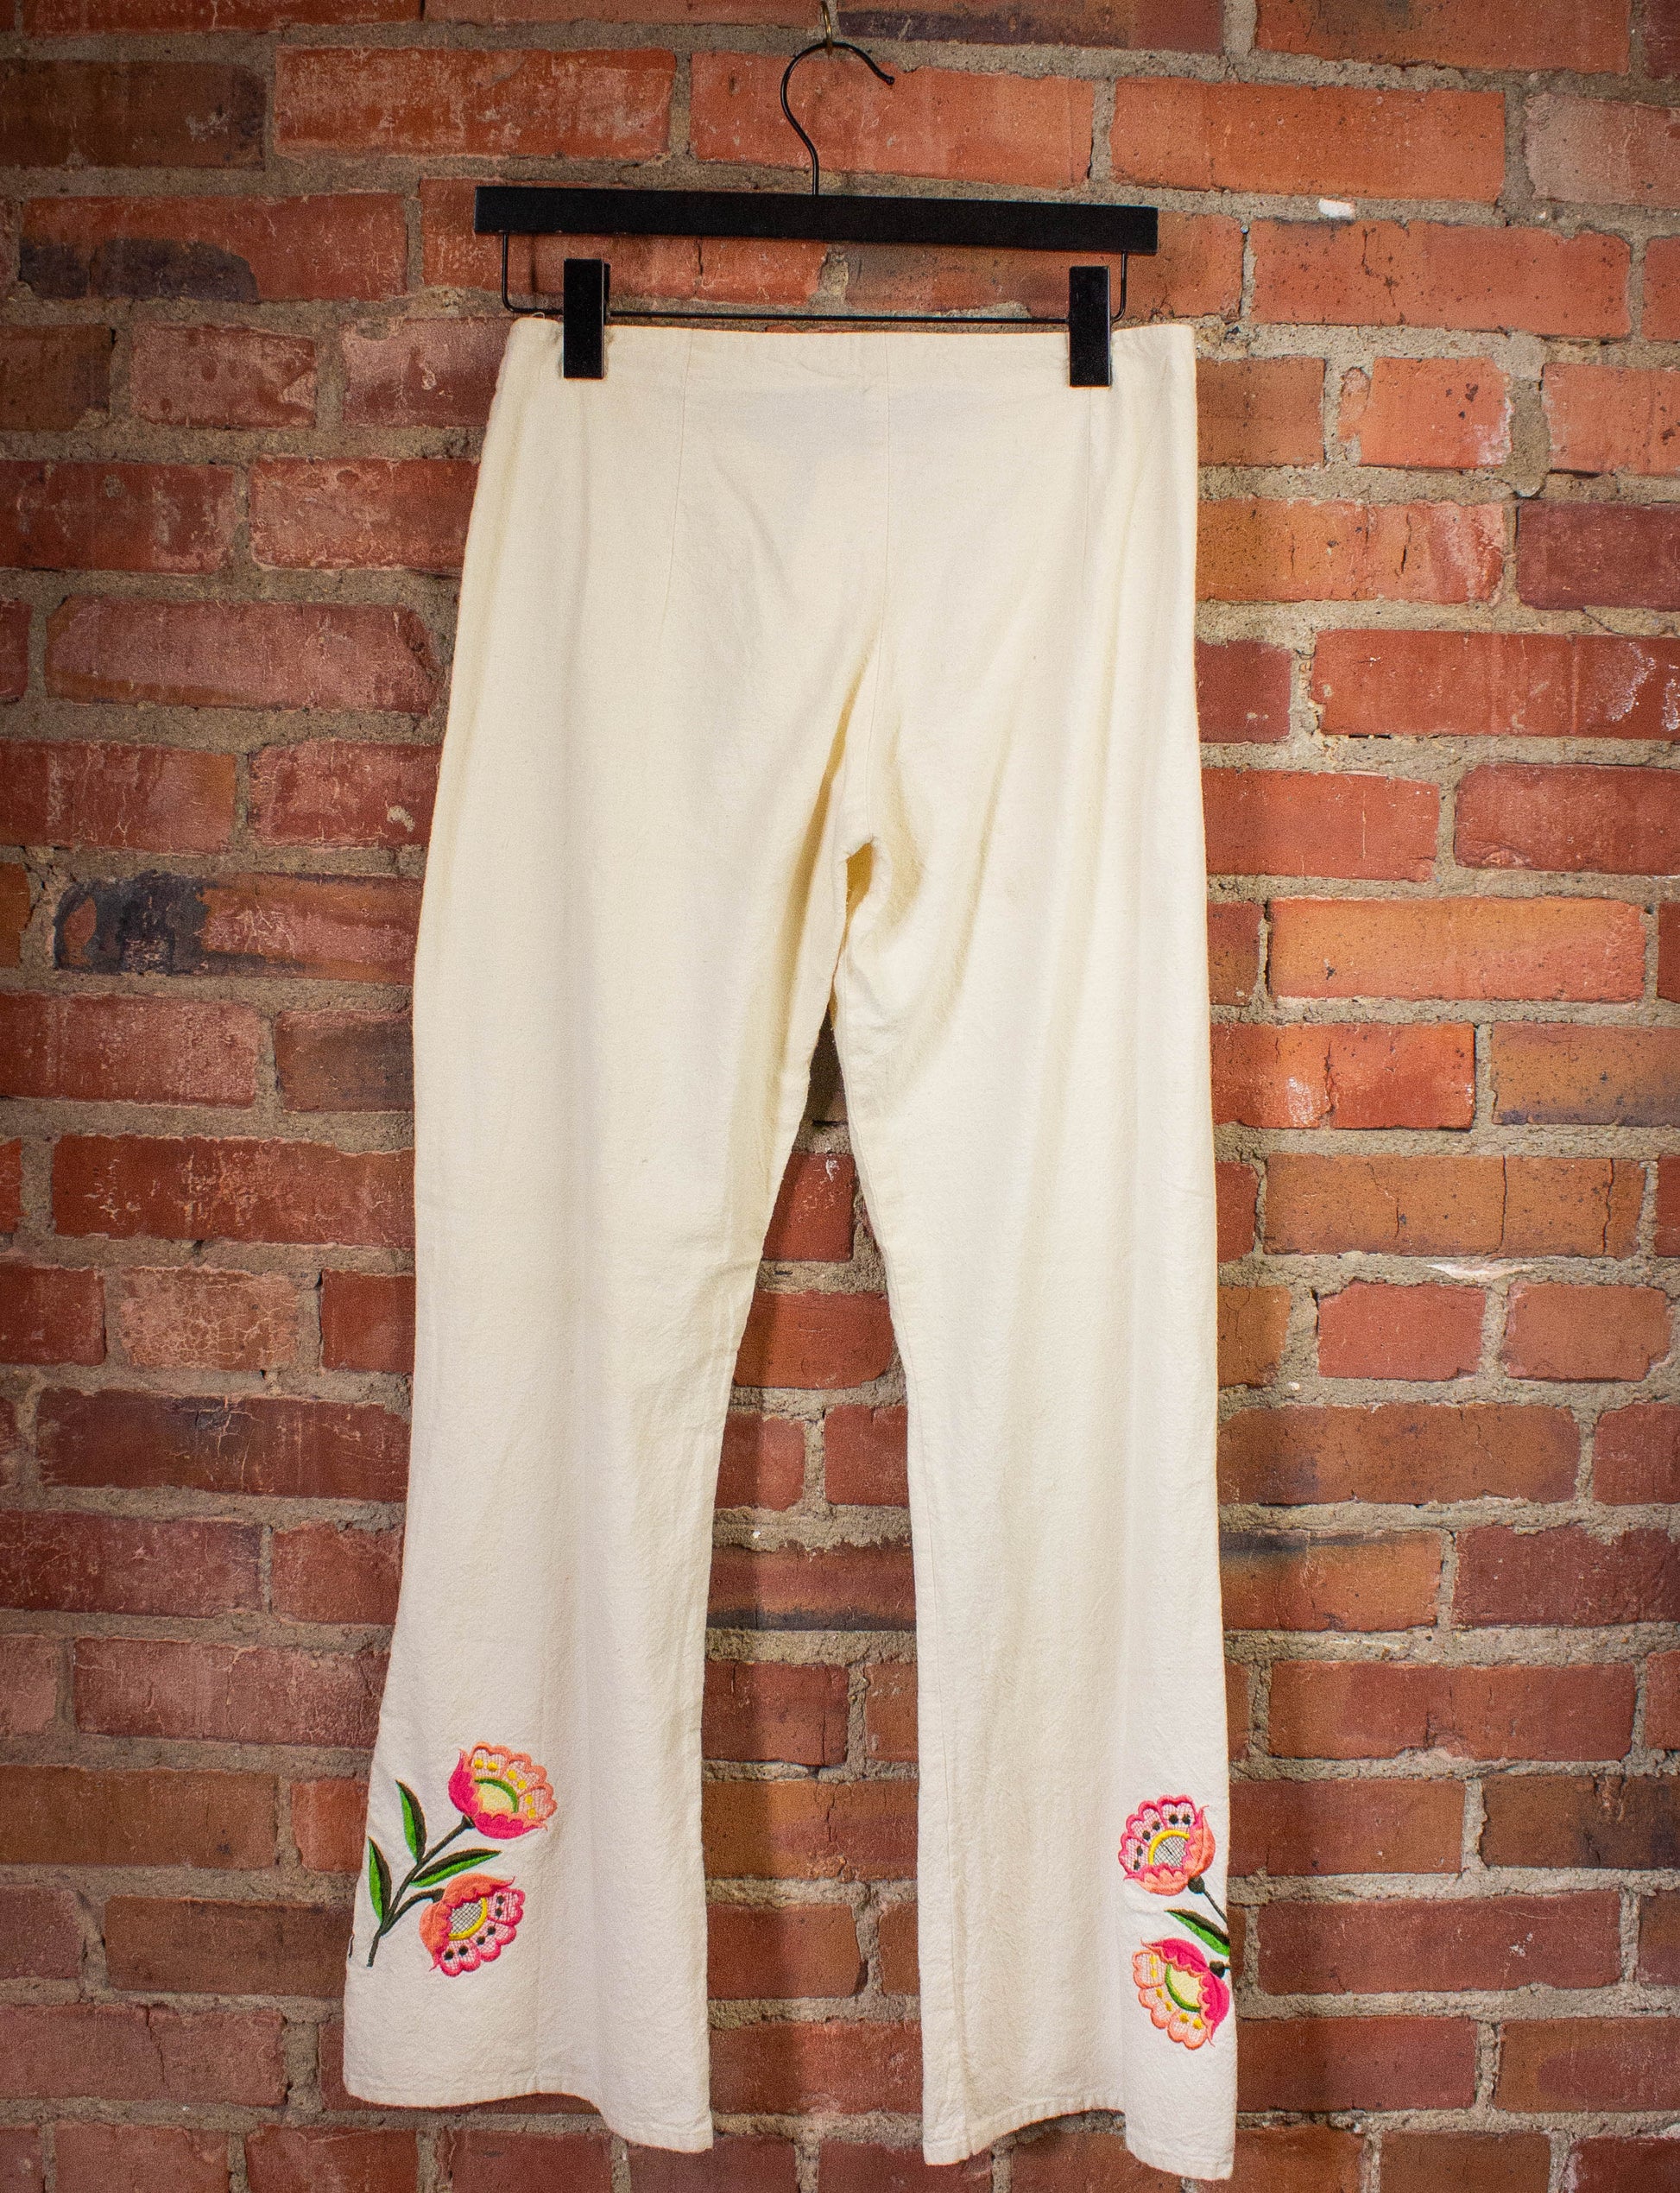 Vintage Flower Embroidered Lace Up Bell Bottoms Pants 70s White 28x29 –  Black Shag Vintage